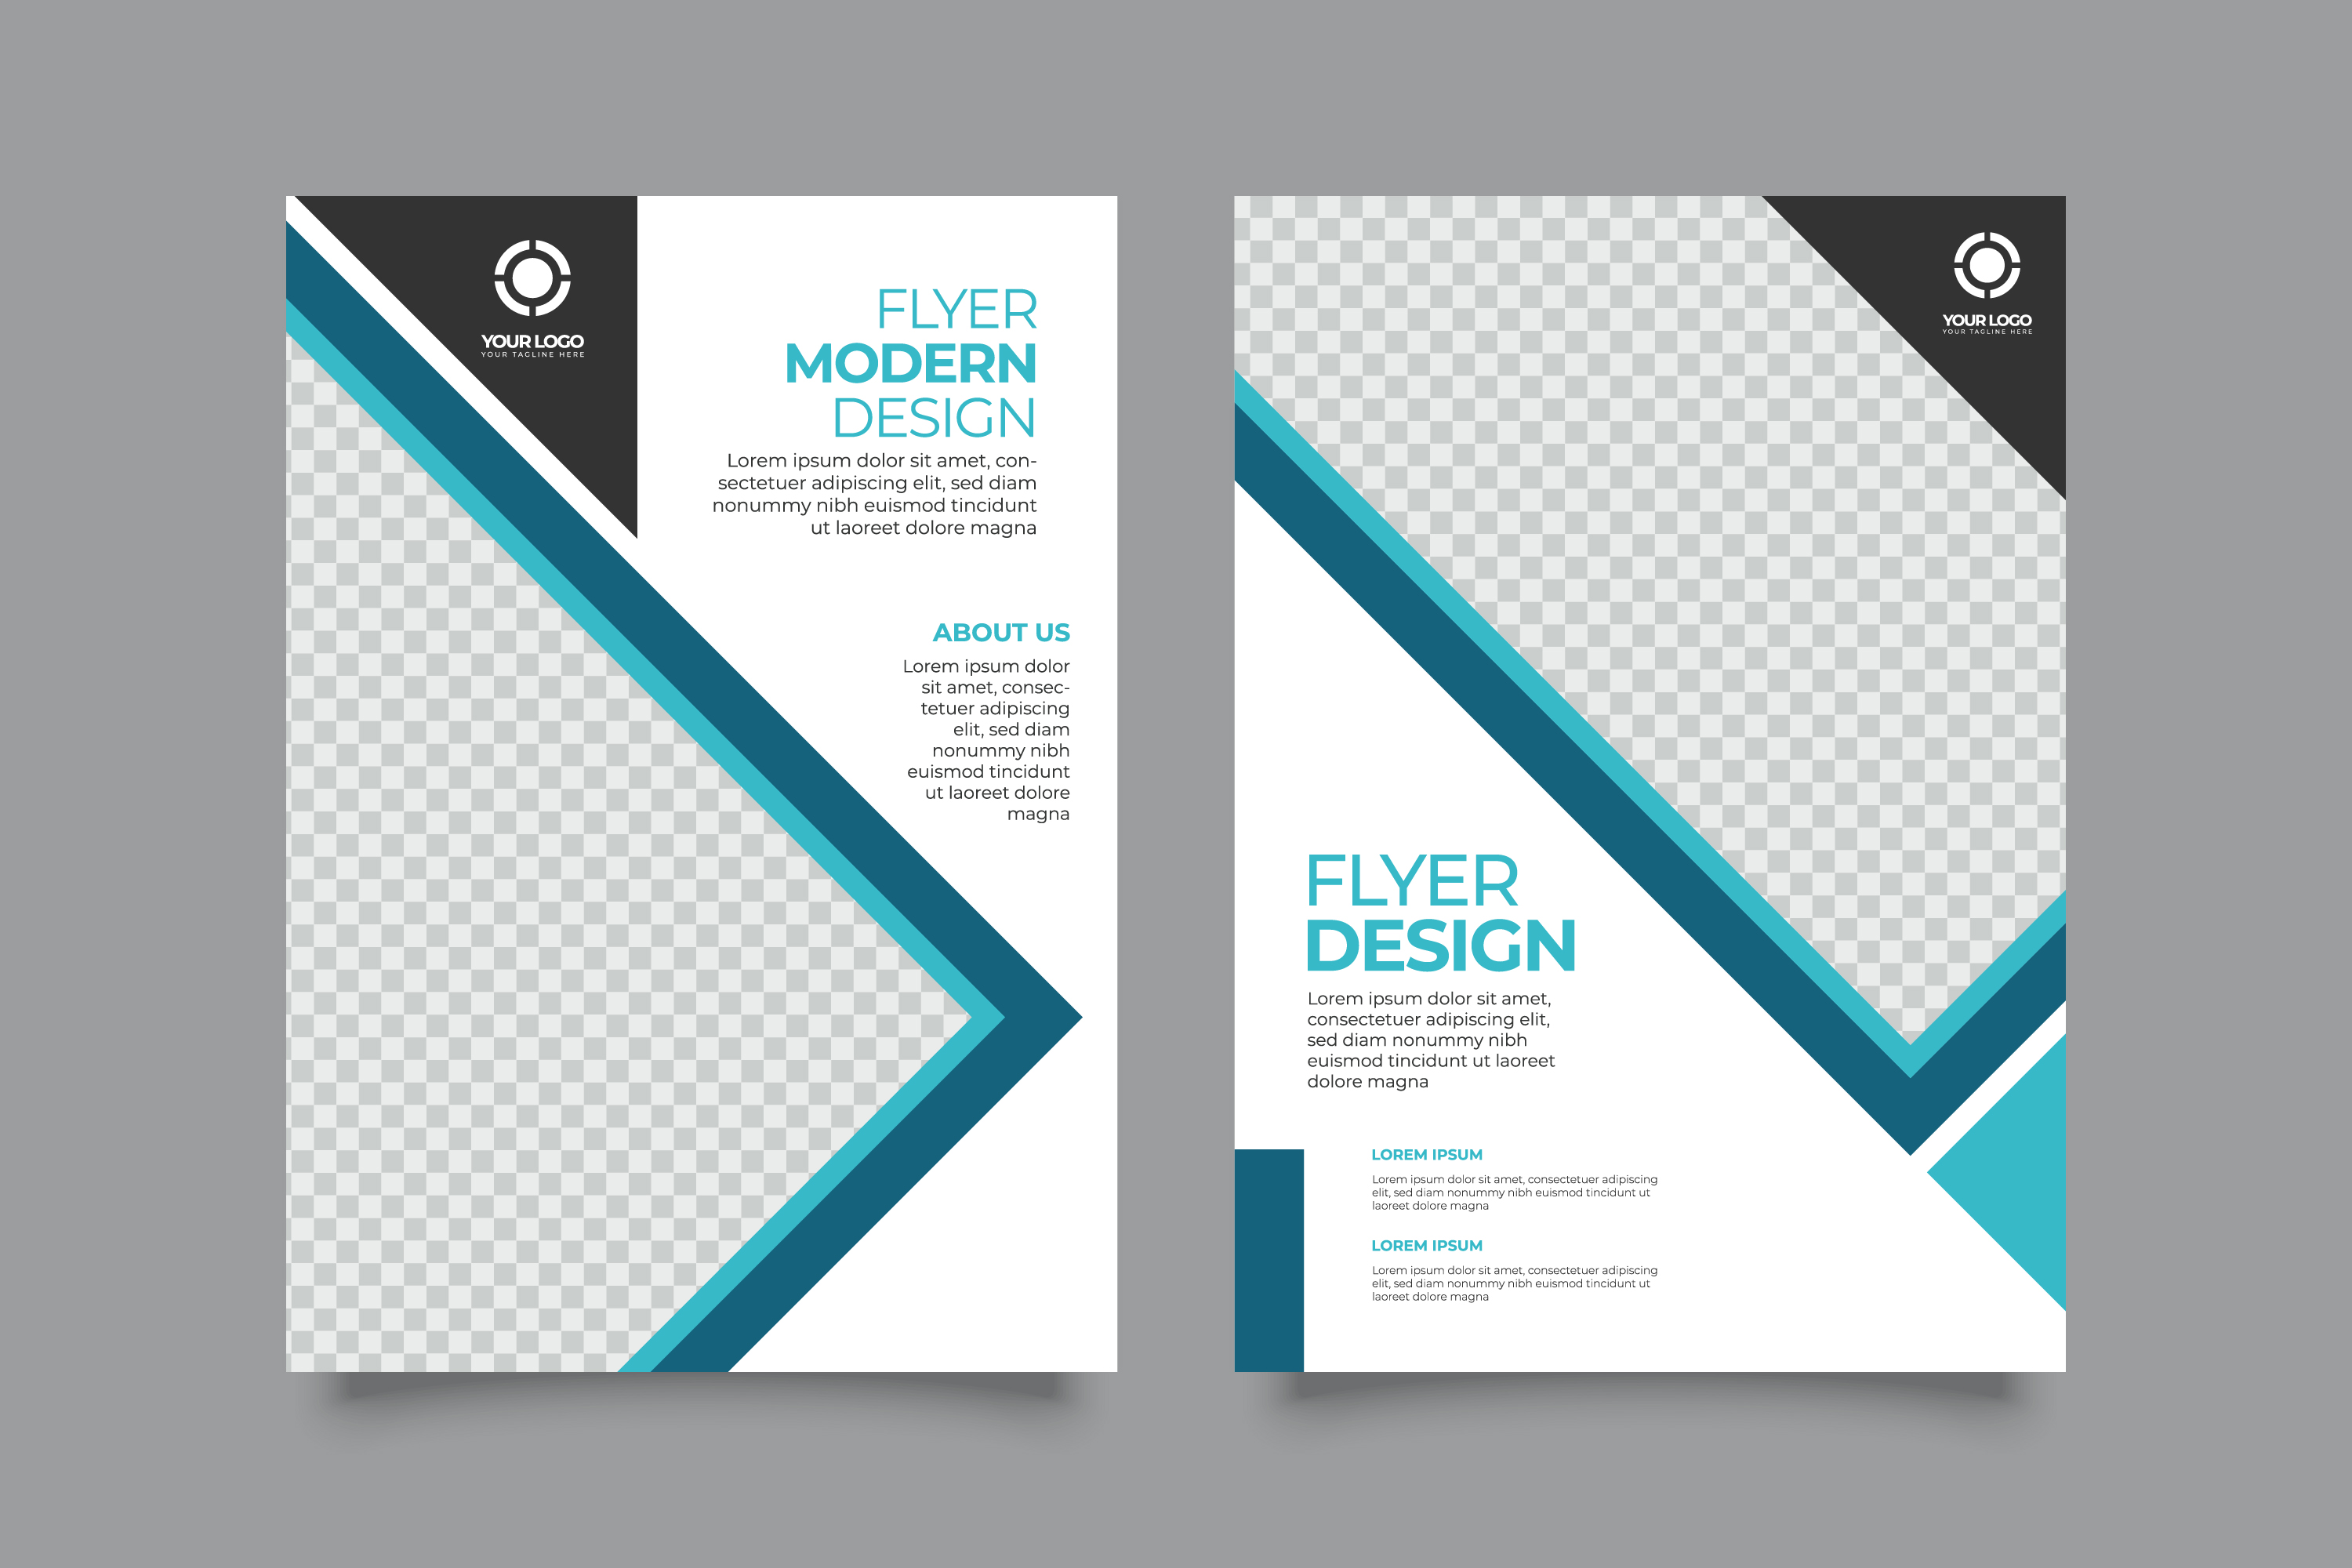 Modern Template Flyer Or Brochure Property Business Download Free Vectors Clipart Graphics Vector Art